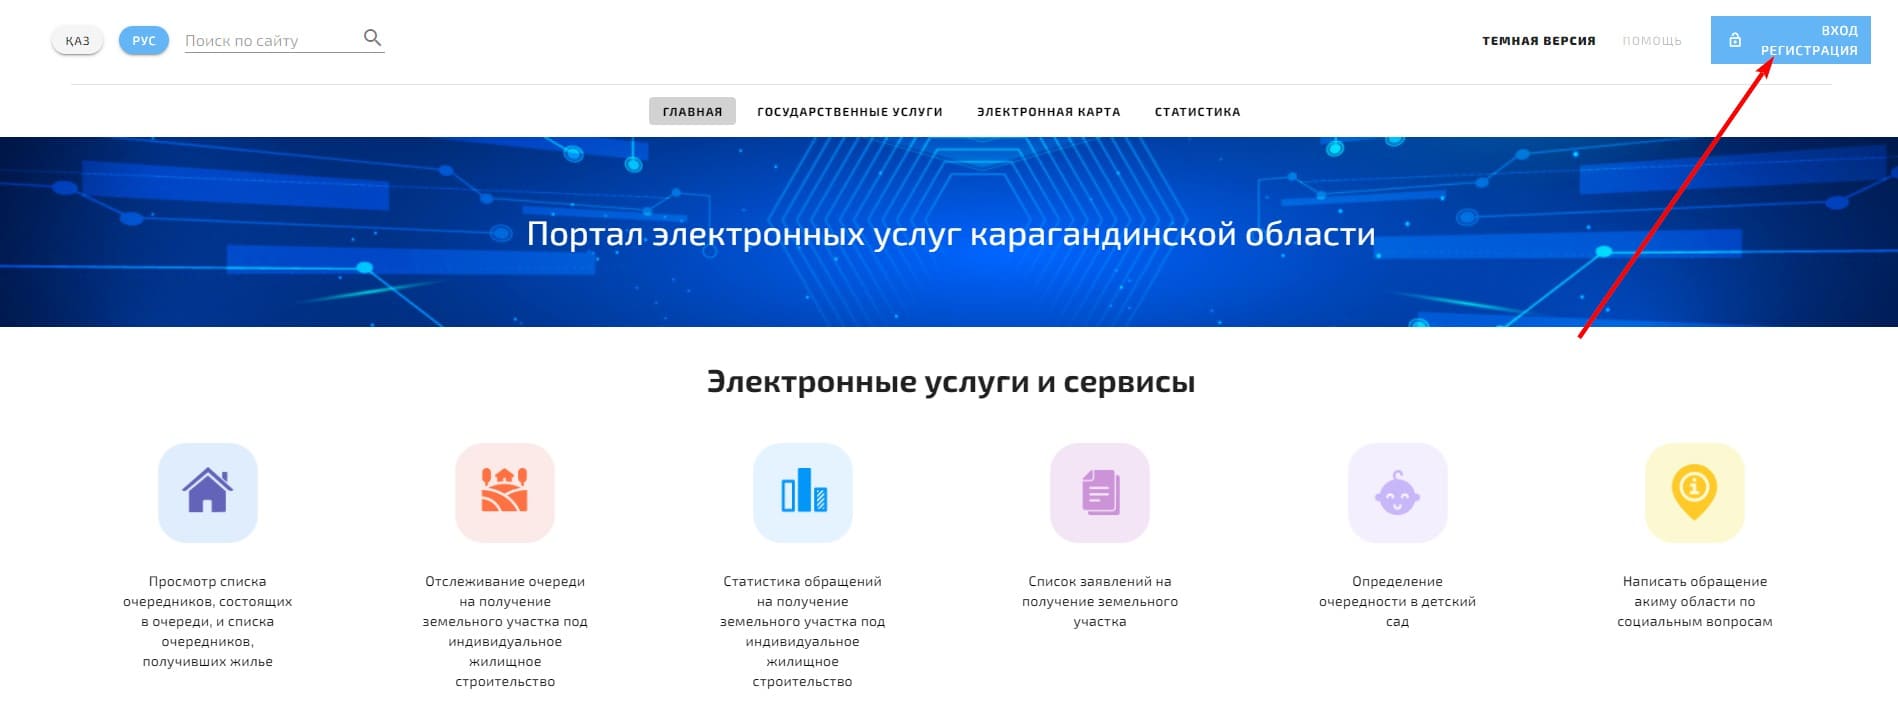 Портал электронных услуг карагандинской области (e-krg.kz)